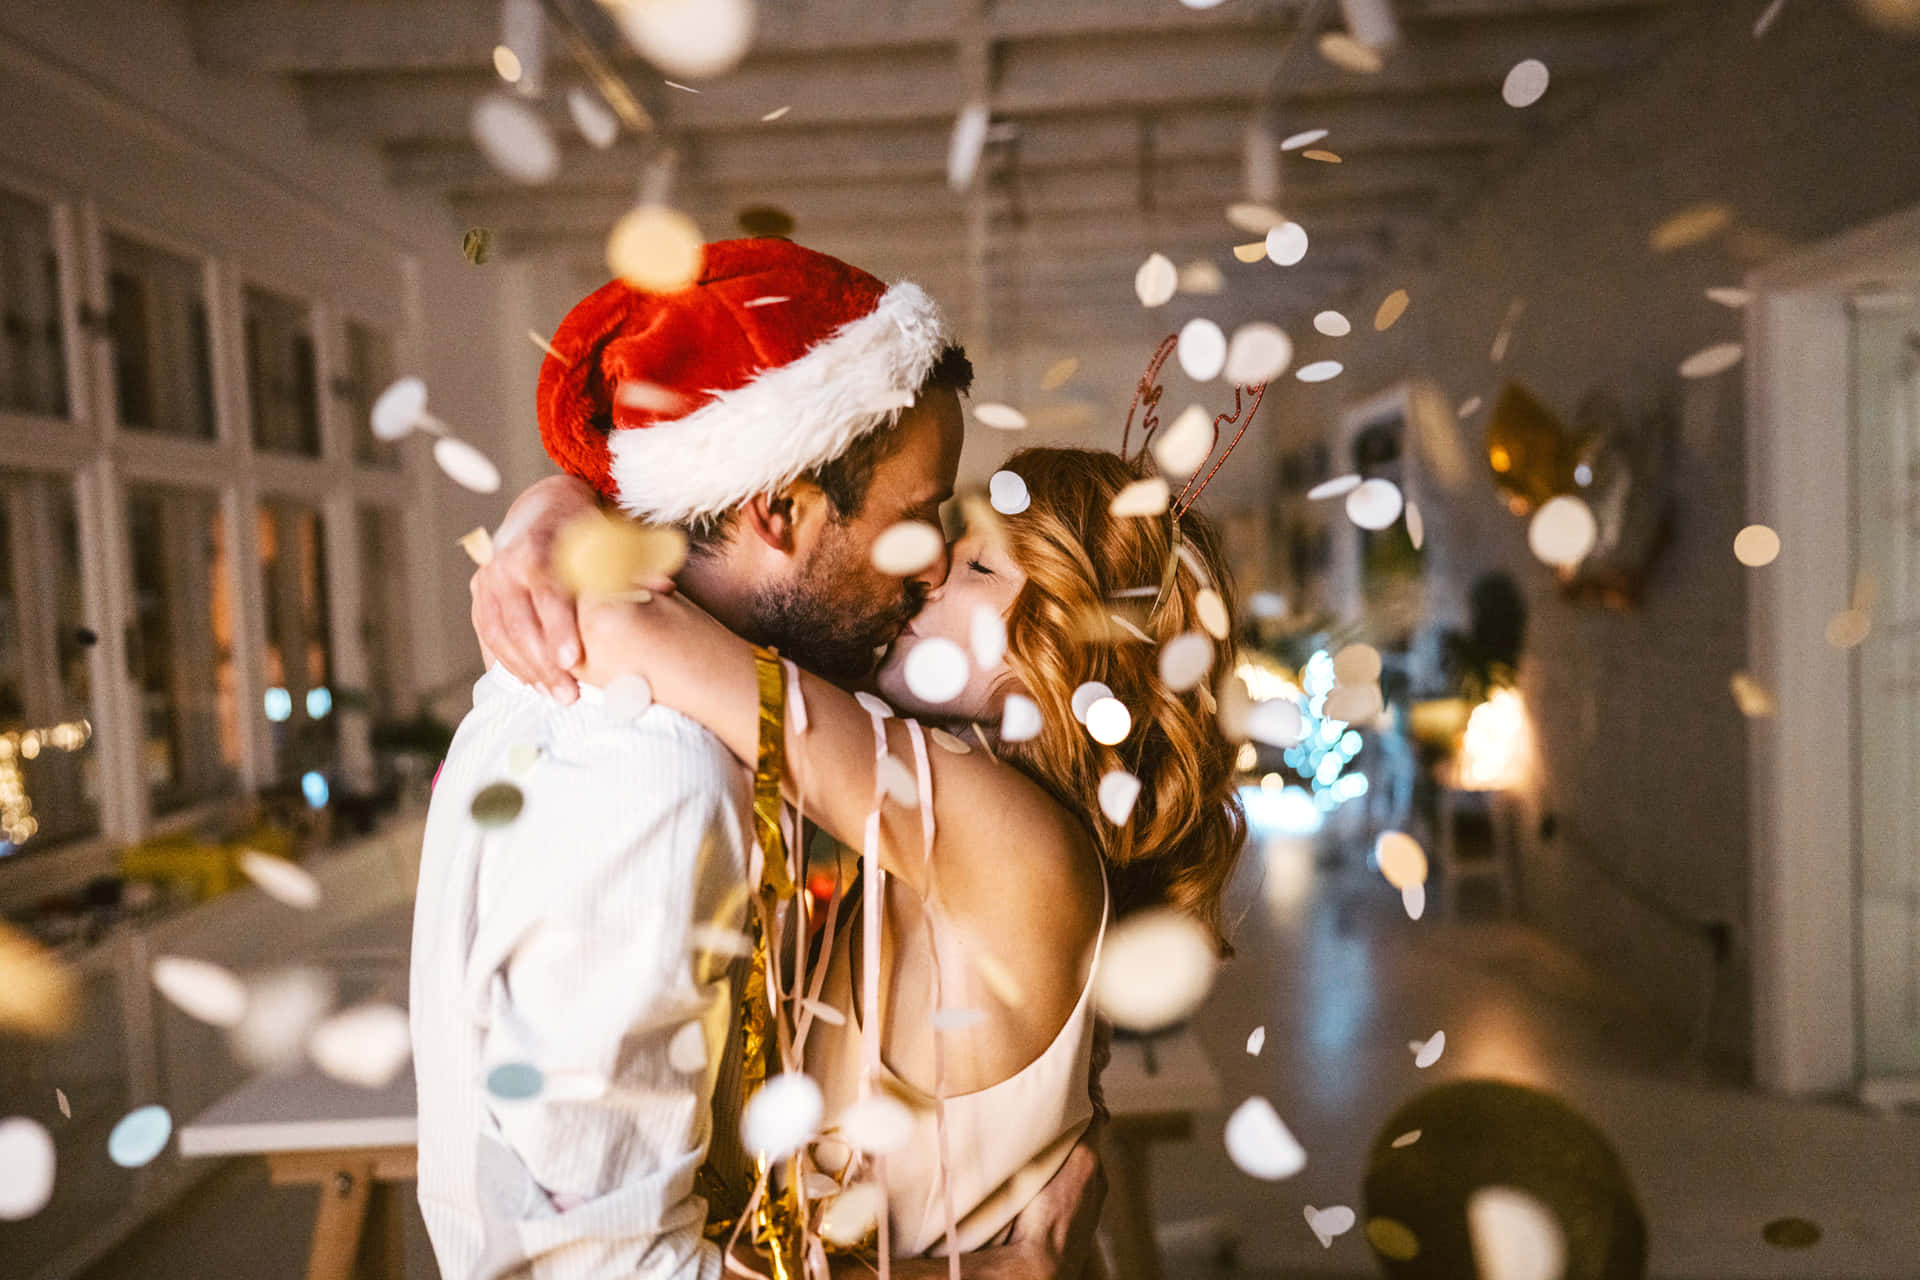 December Romance - Celebrating Christmas As A Couple